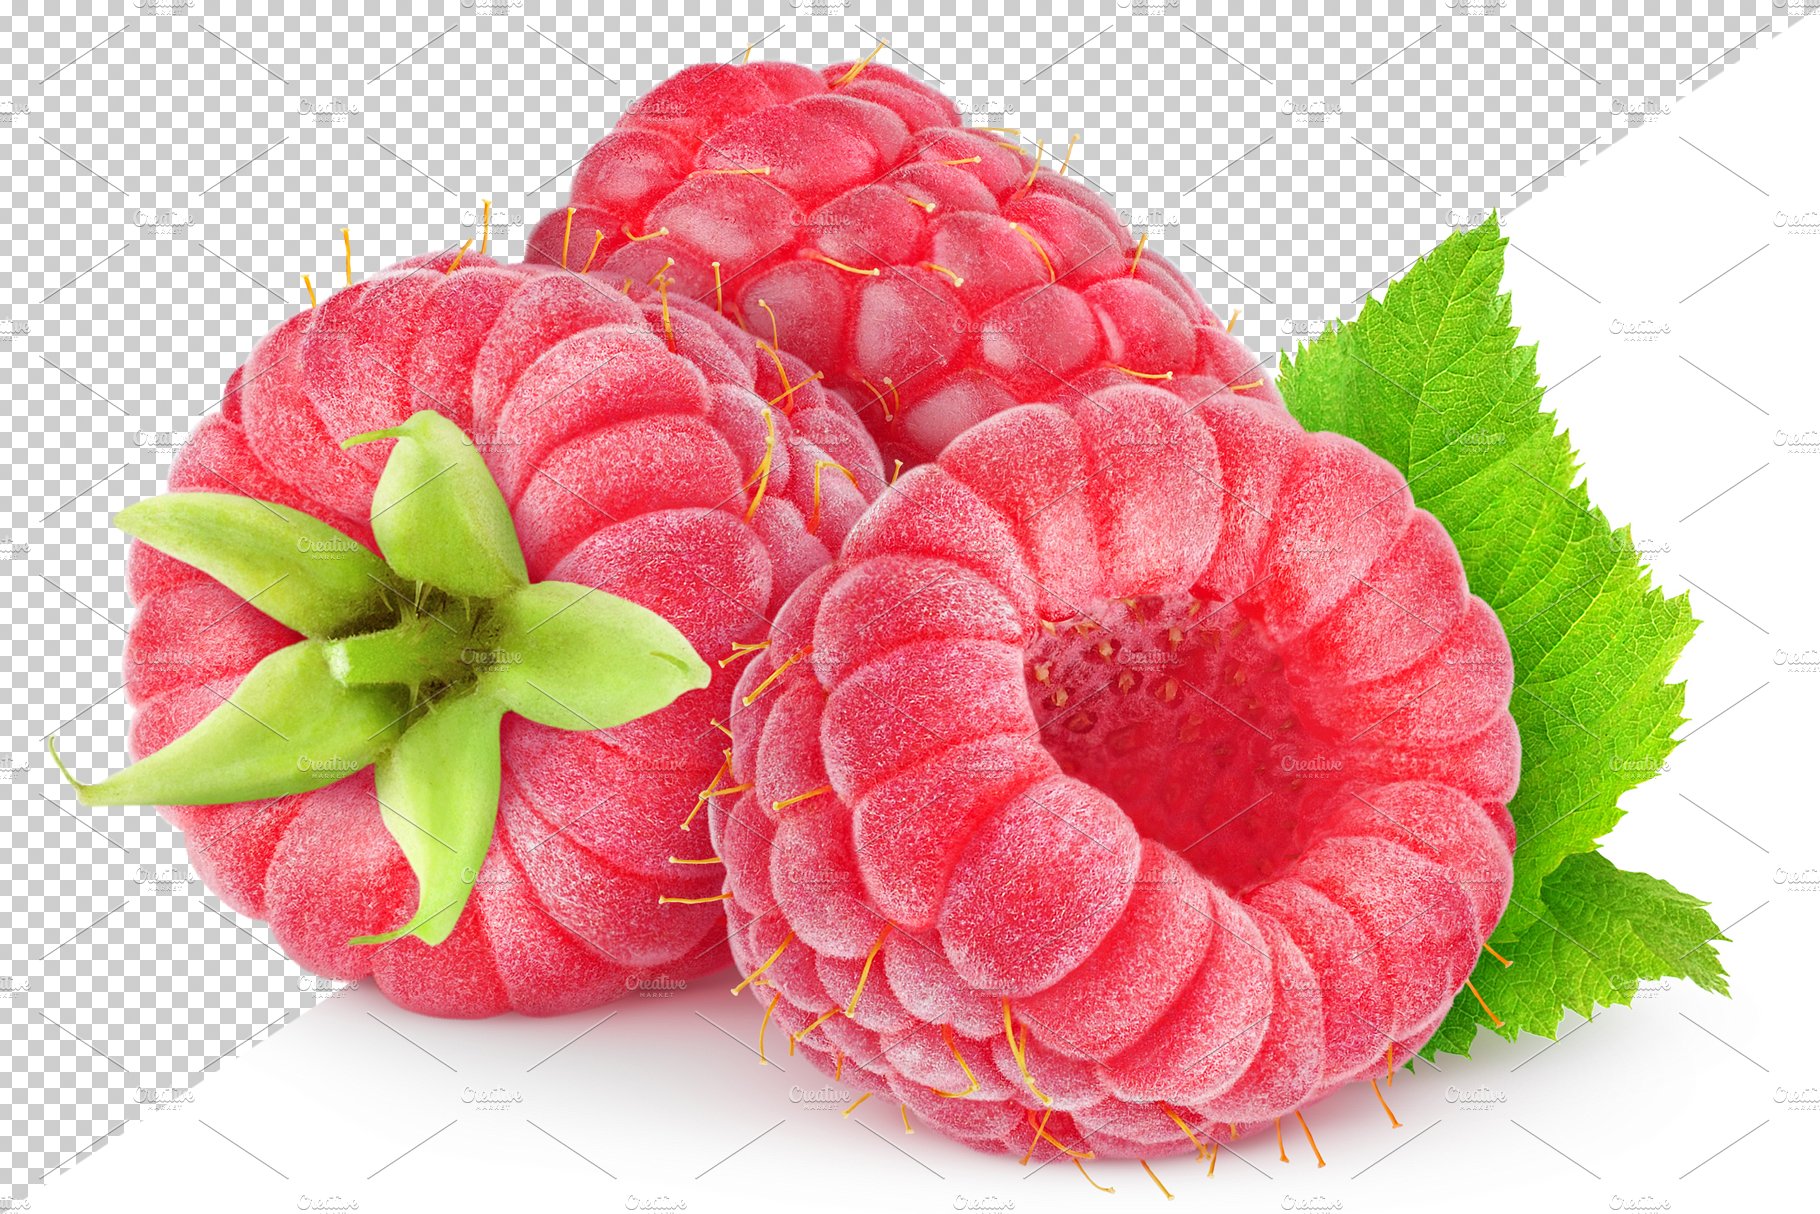 Fresh raspberries preview image.